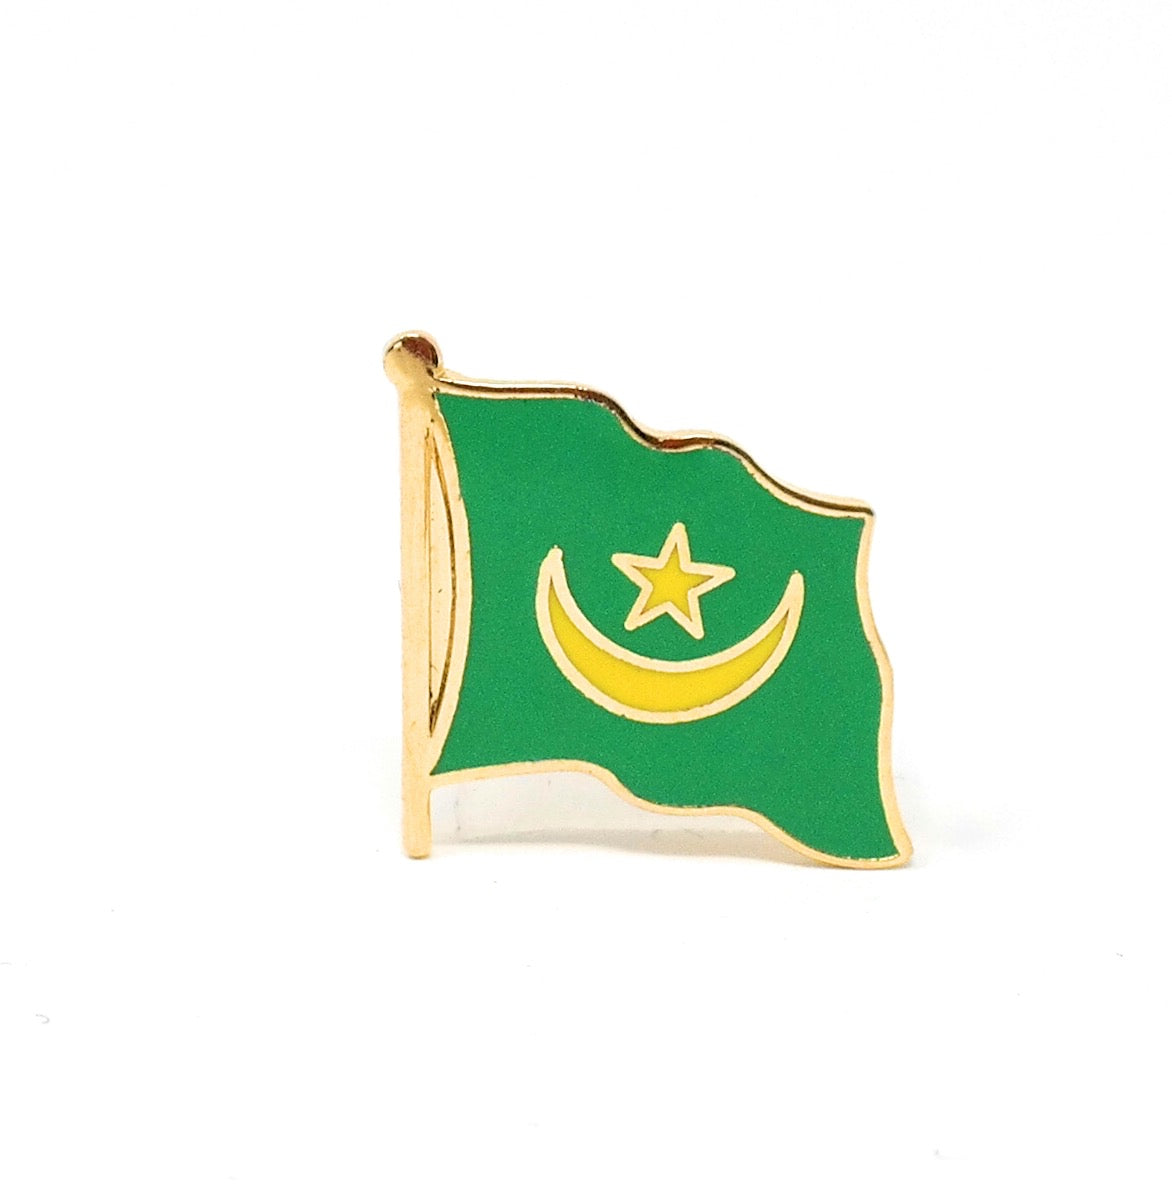 Mauritania Flag Lapel Pin